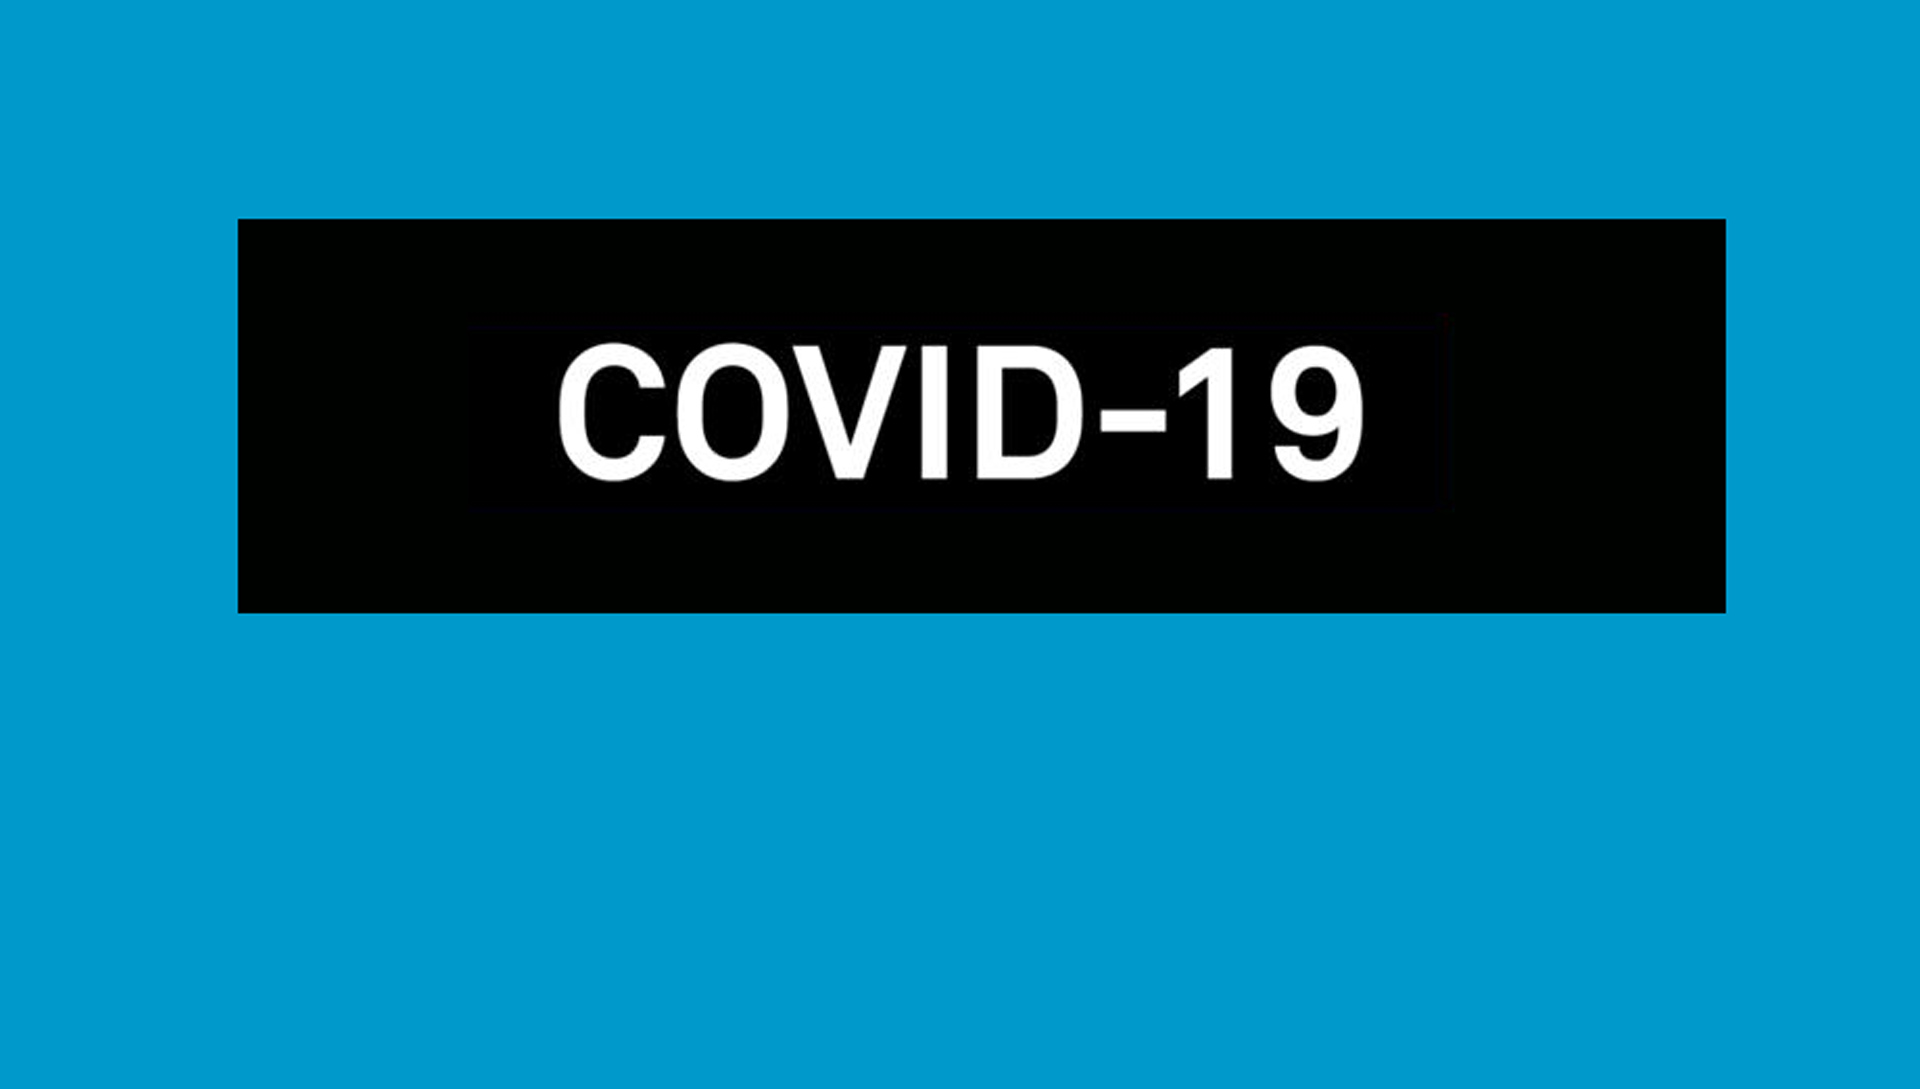 Coronavirus - Covid 19